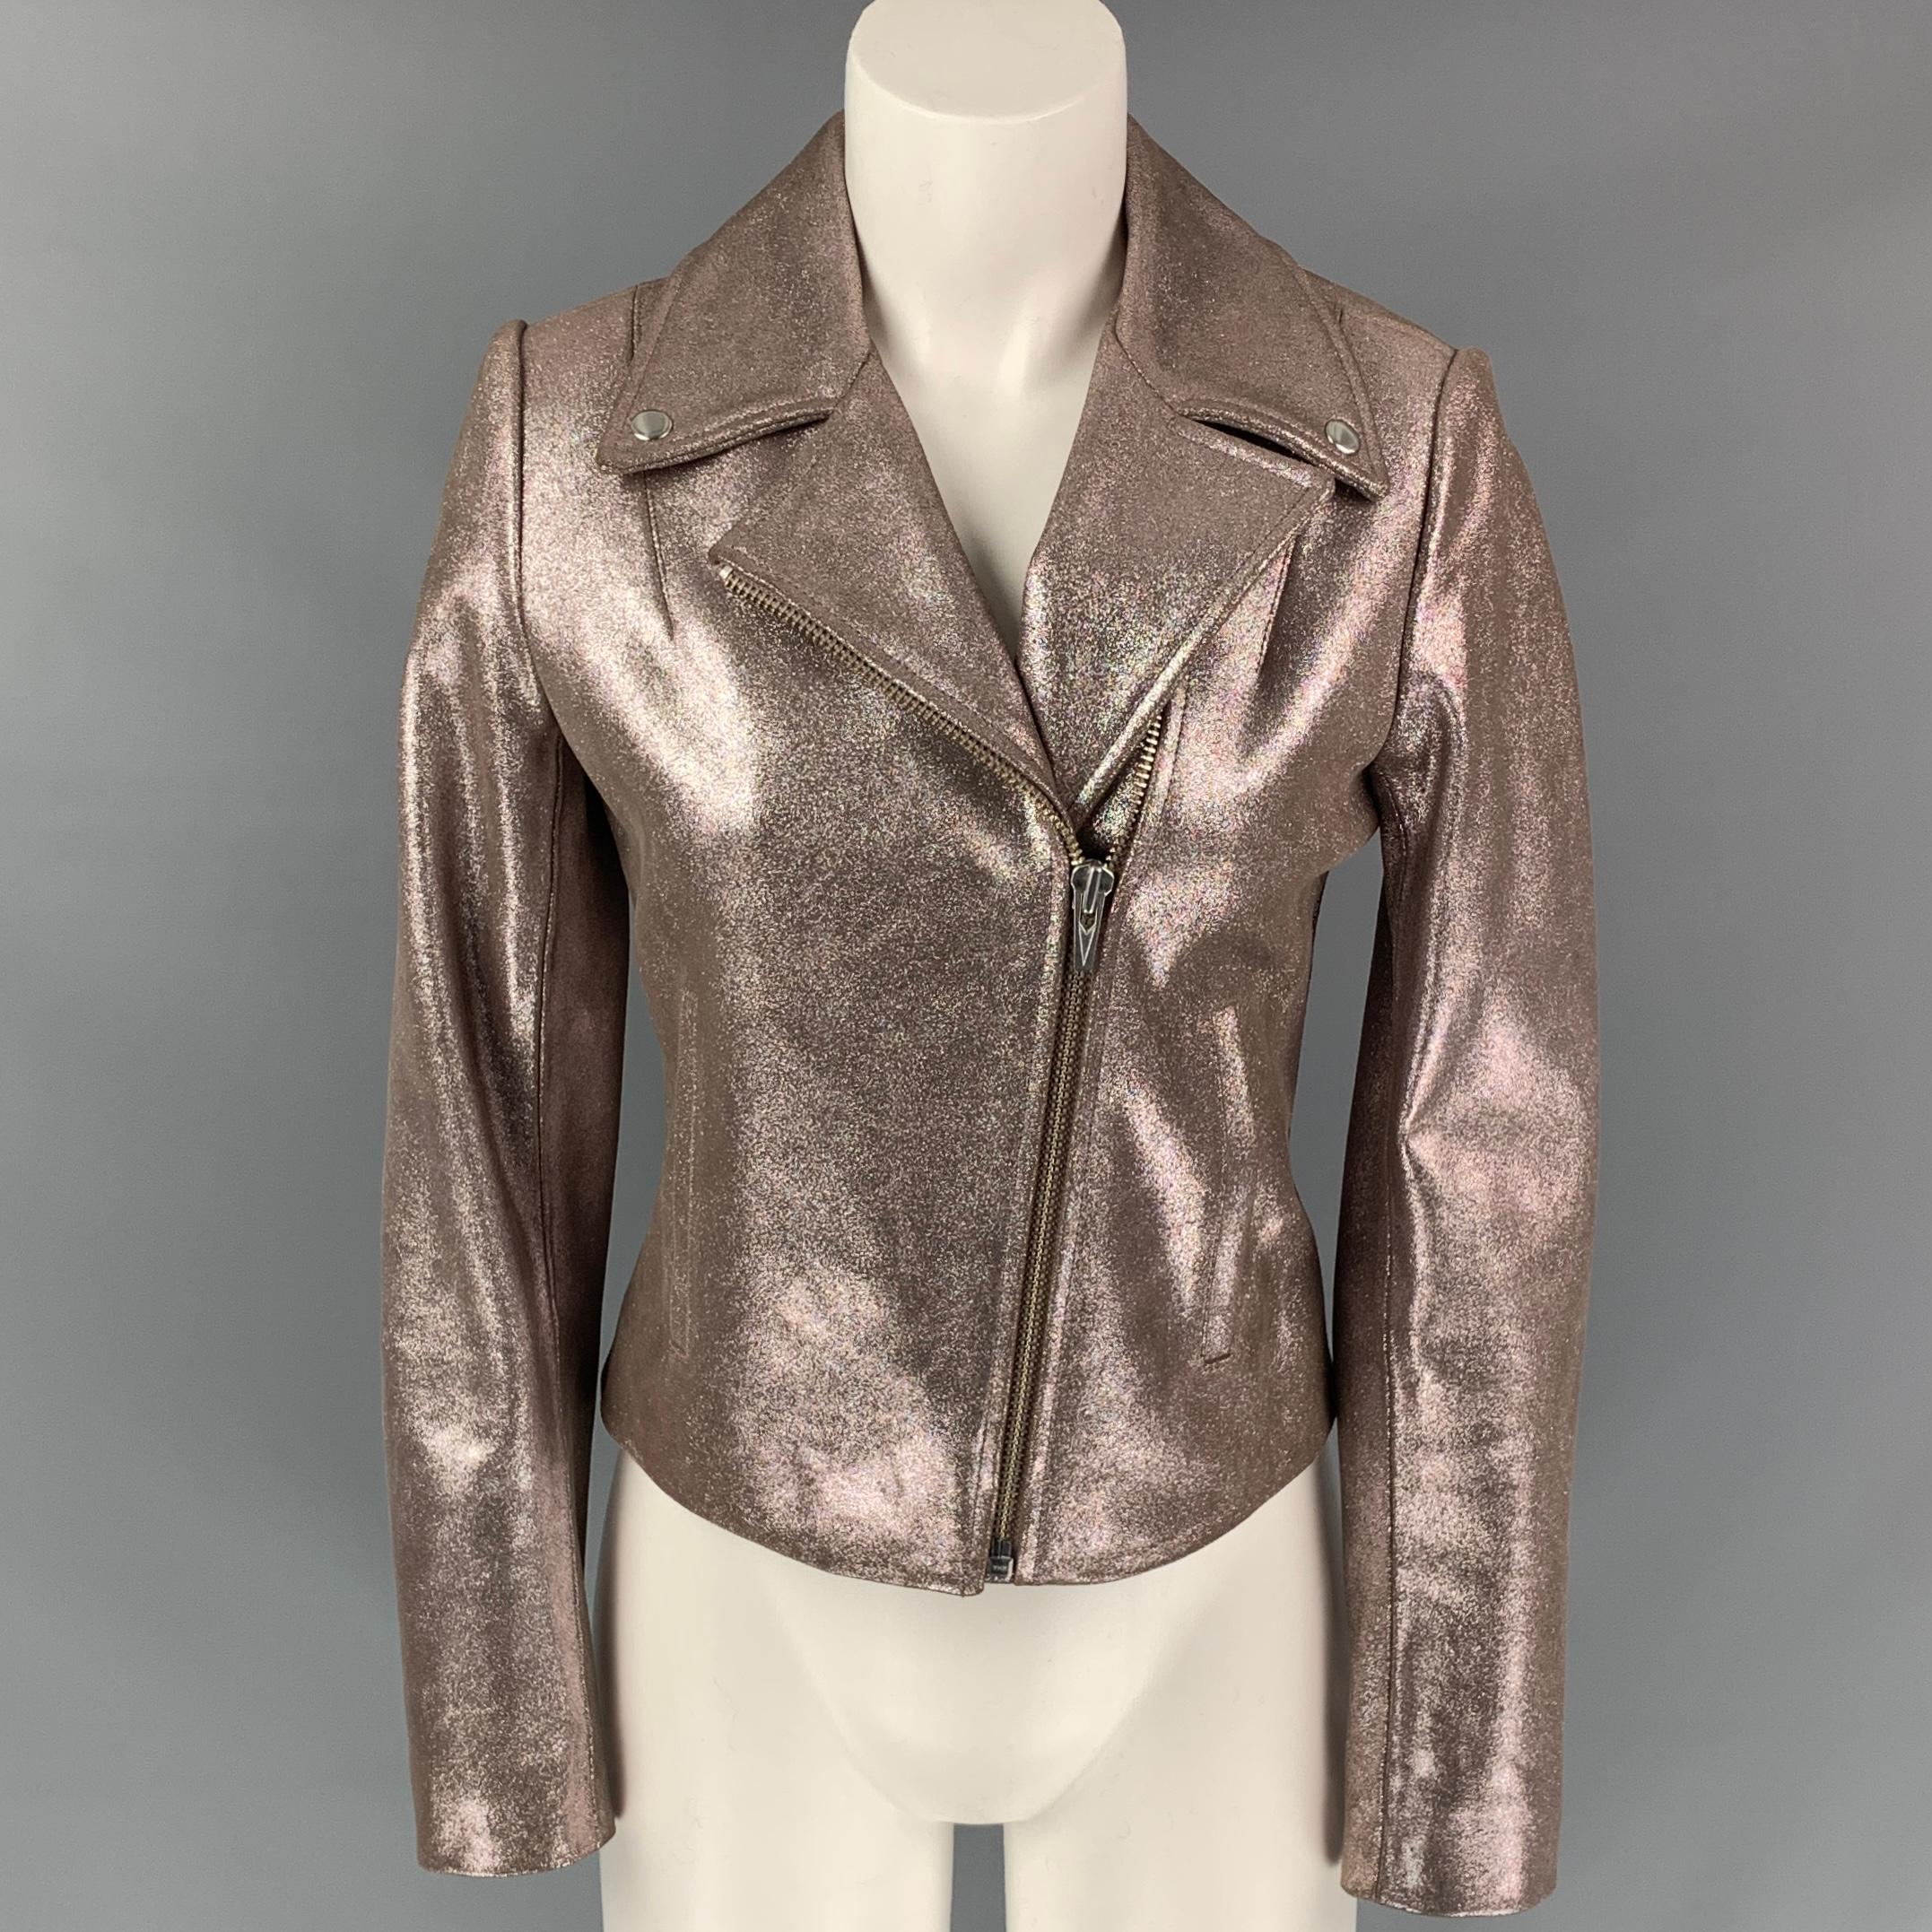 1stDibs Veda Size S Rose Gold Leather Metallic Bikerjacket